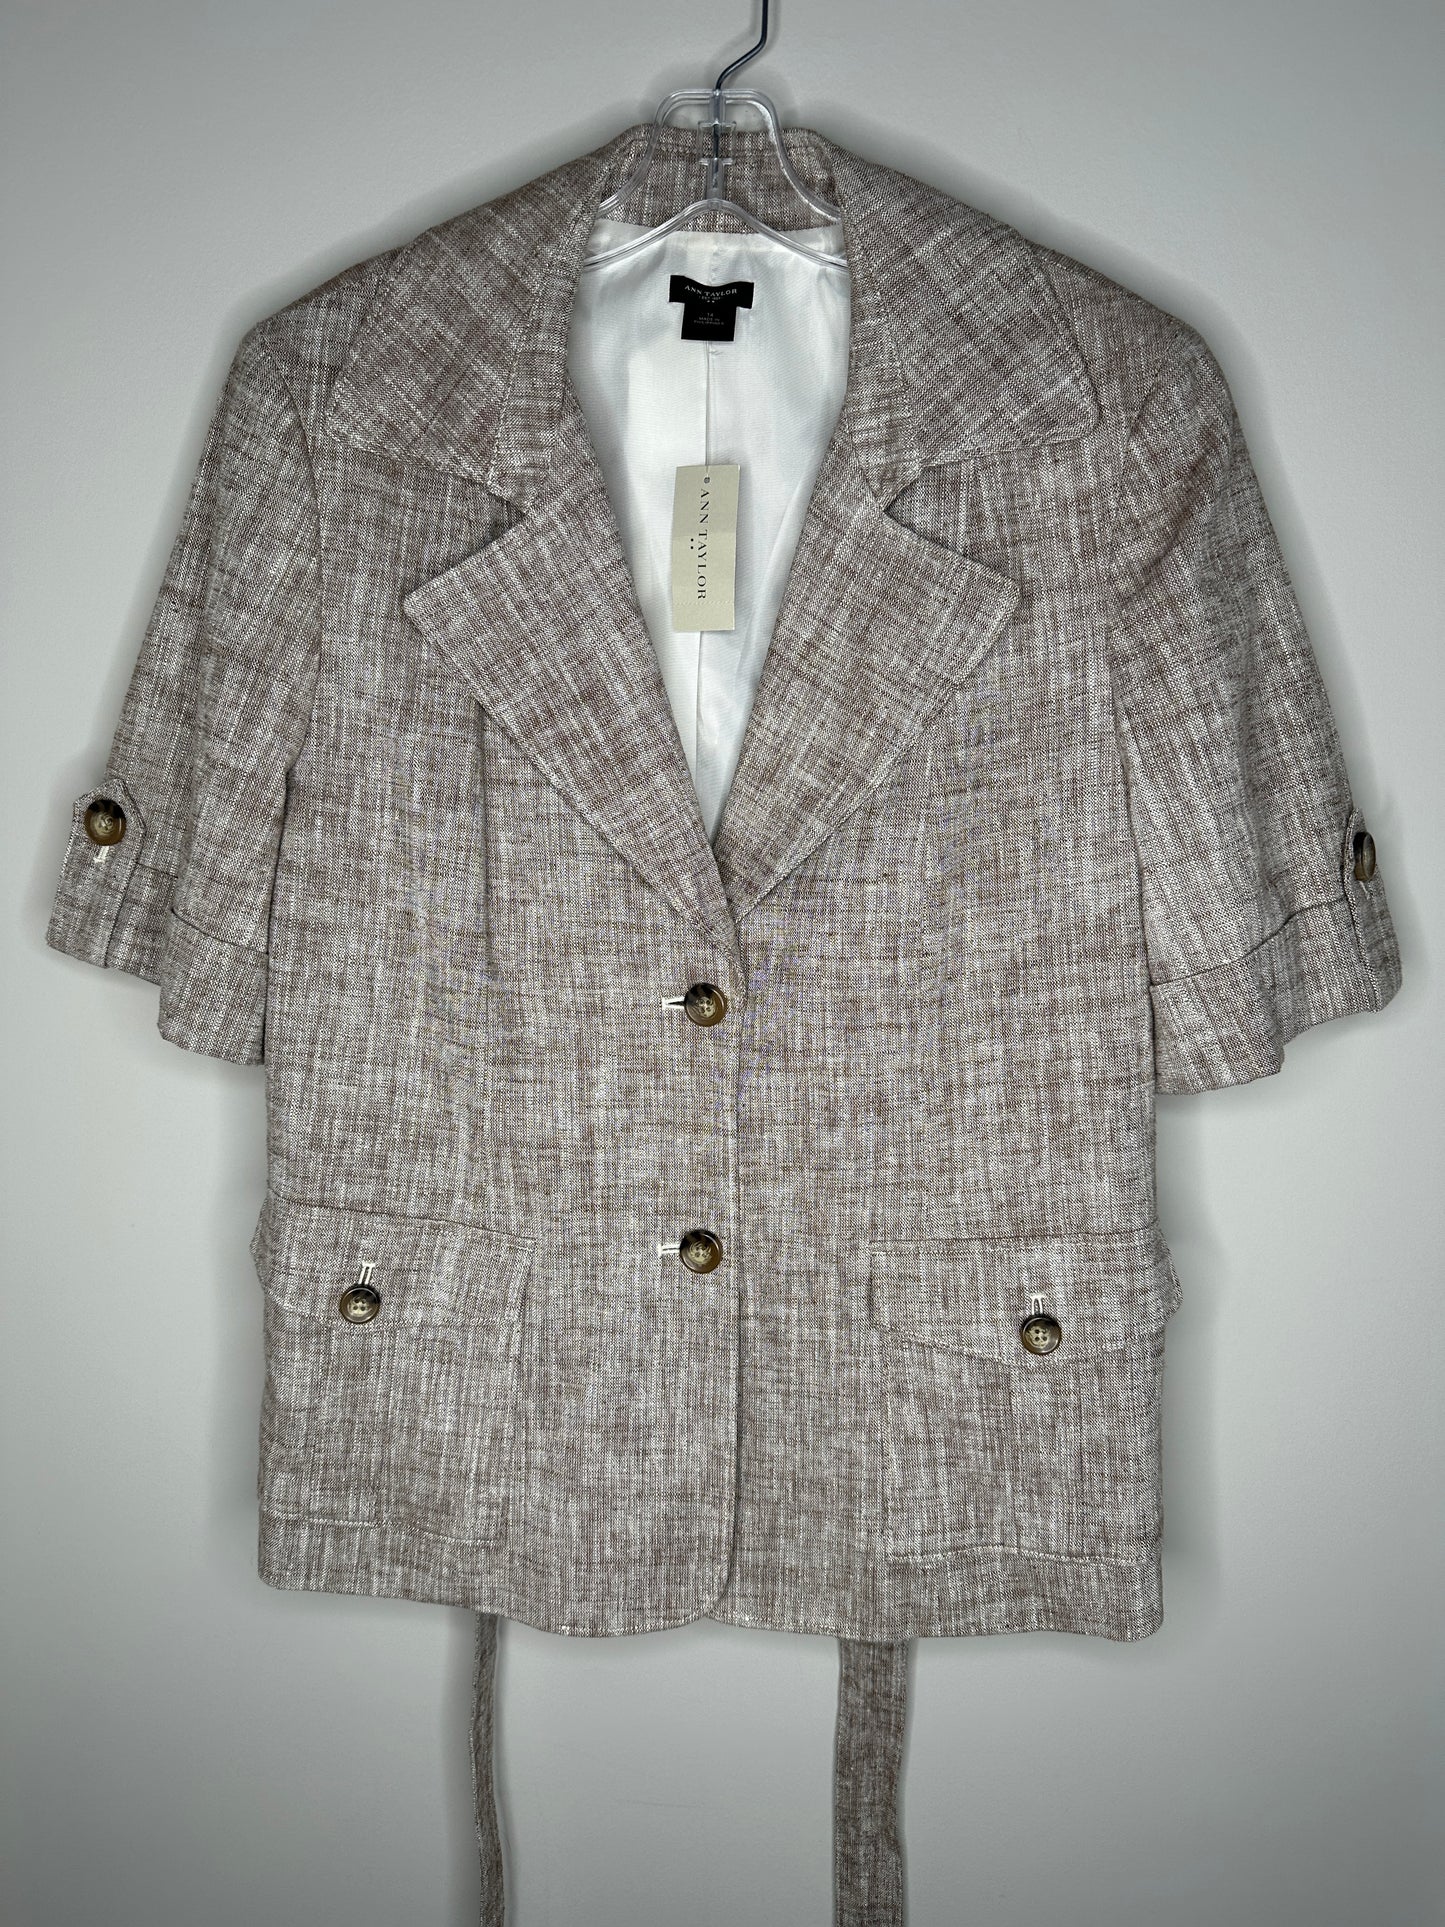 Ann Taylor Brown Heather Linen Blend Skirt Suit Skirt & Jacket (Size 14 Jacket, Size 12 Skirt), new/NWT